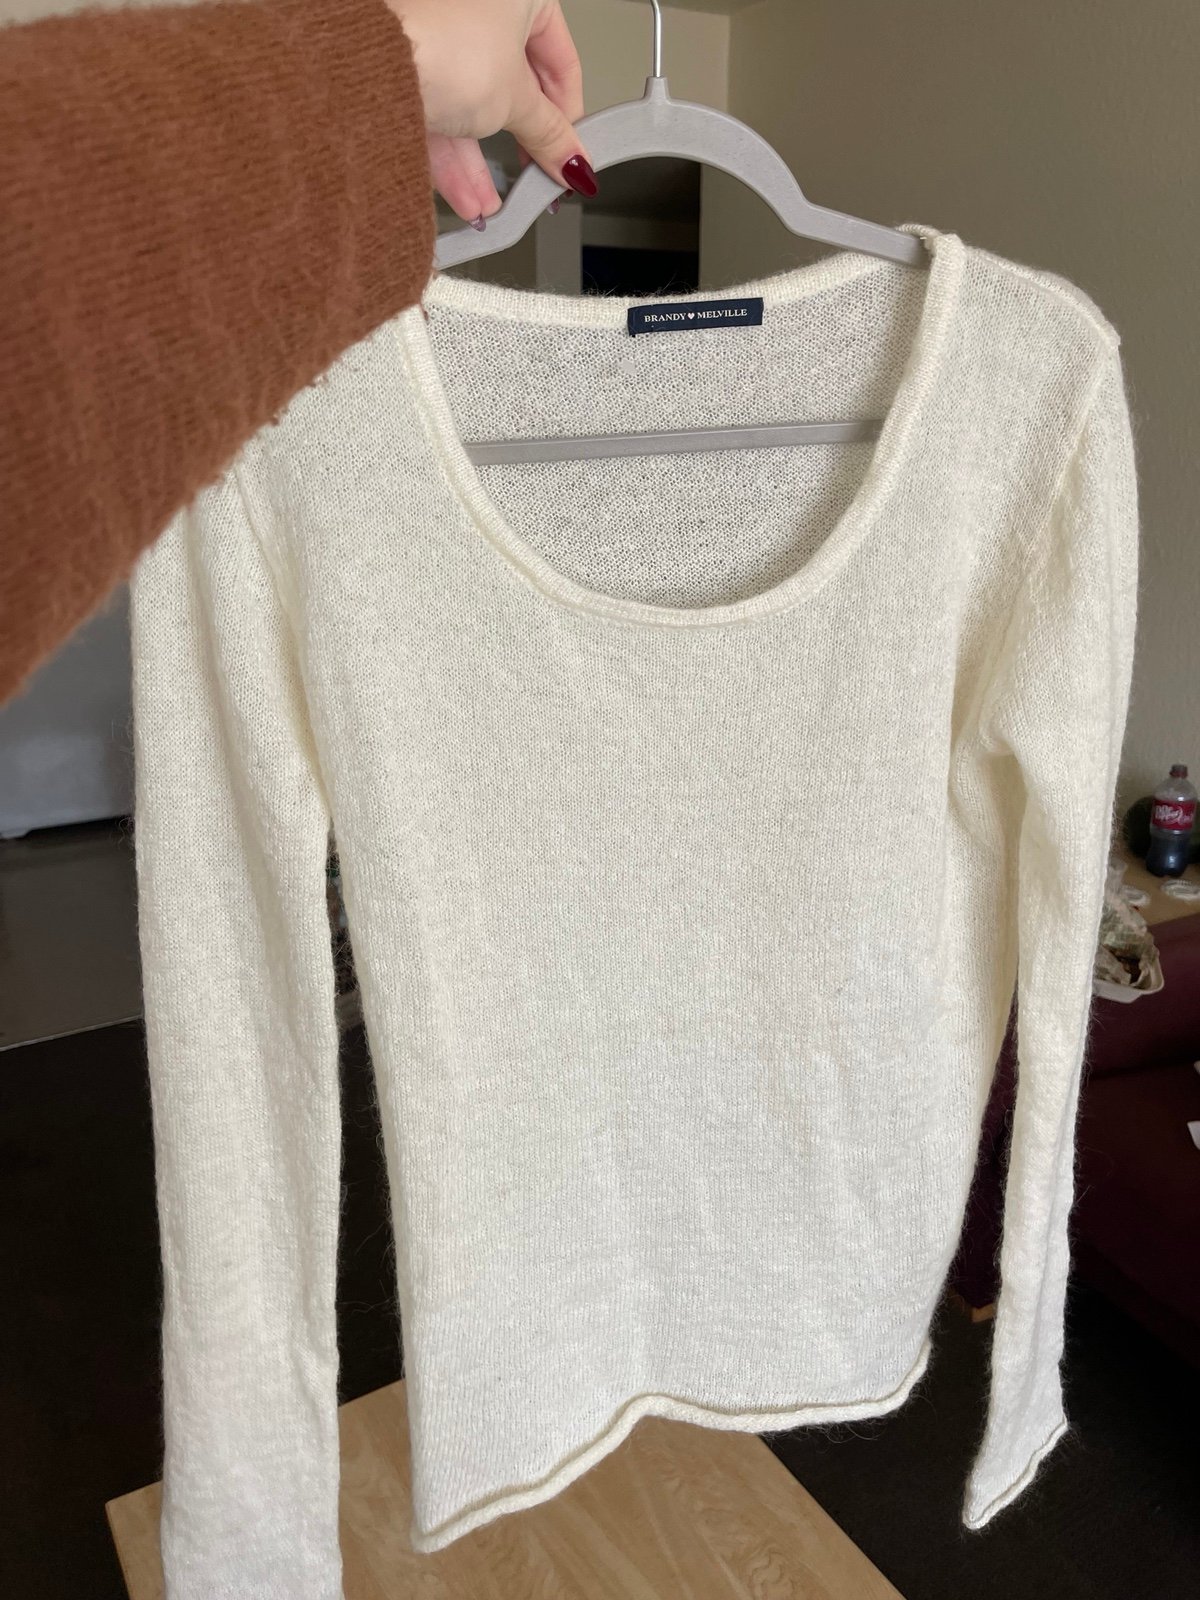 reasonable price Brandy Melville sweater Ogzl3vgol Hot 